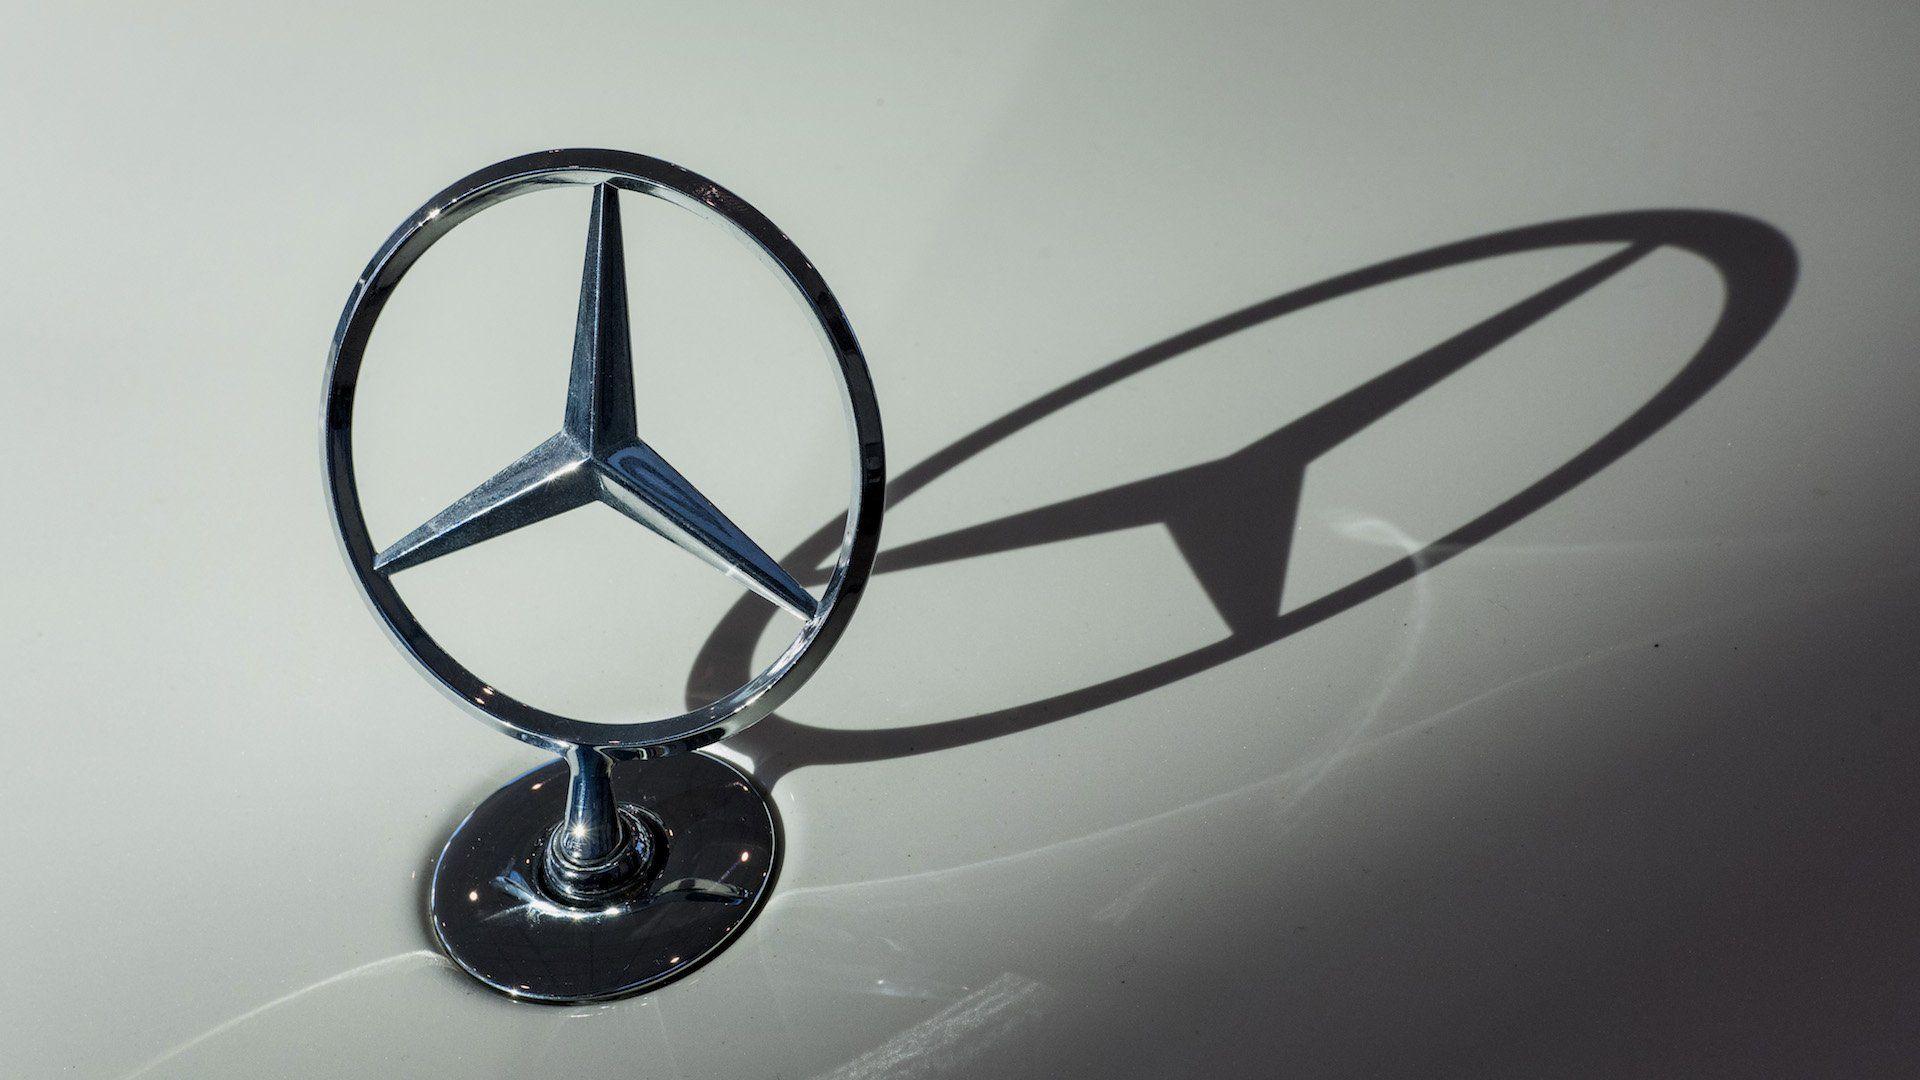 2018 Mercedes Logo - 2018 Mercedes-Benz C-Class Will Ditch Hood Ornament to Attract ...